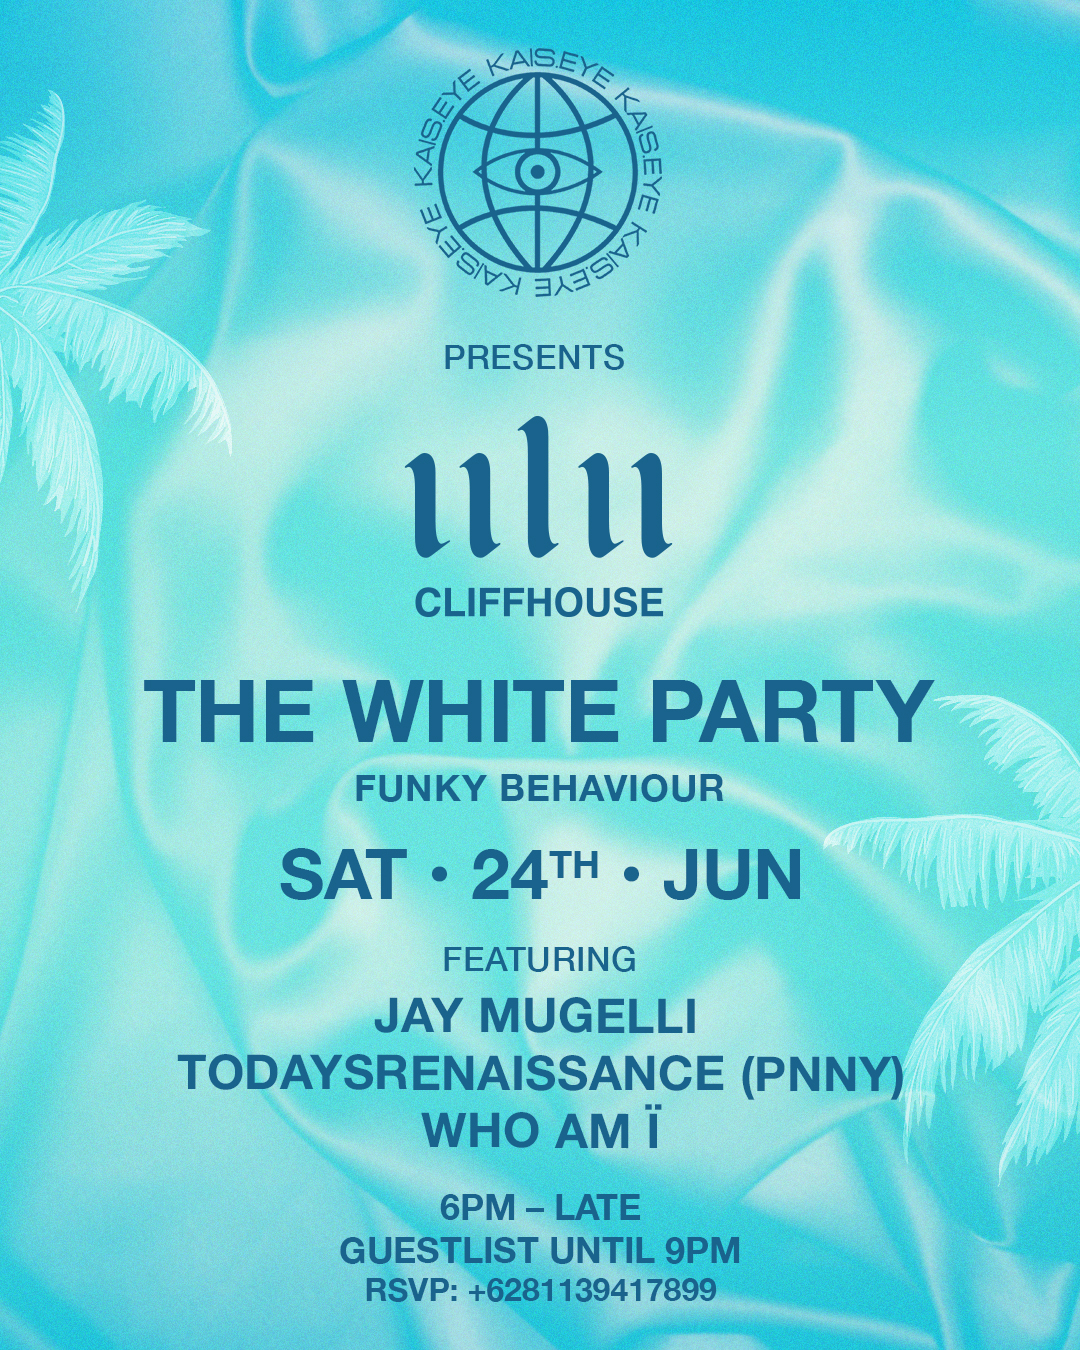 ULU CLIFFHOUSE X KAIS EYE PRESENT THE WHITE PARTY – SATURDAY JUNE 24TH thumbnail image